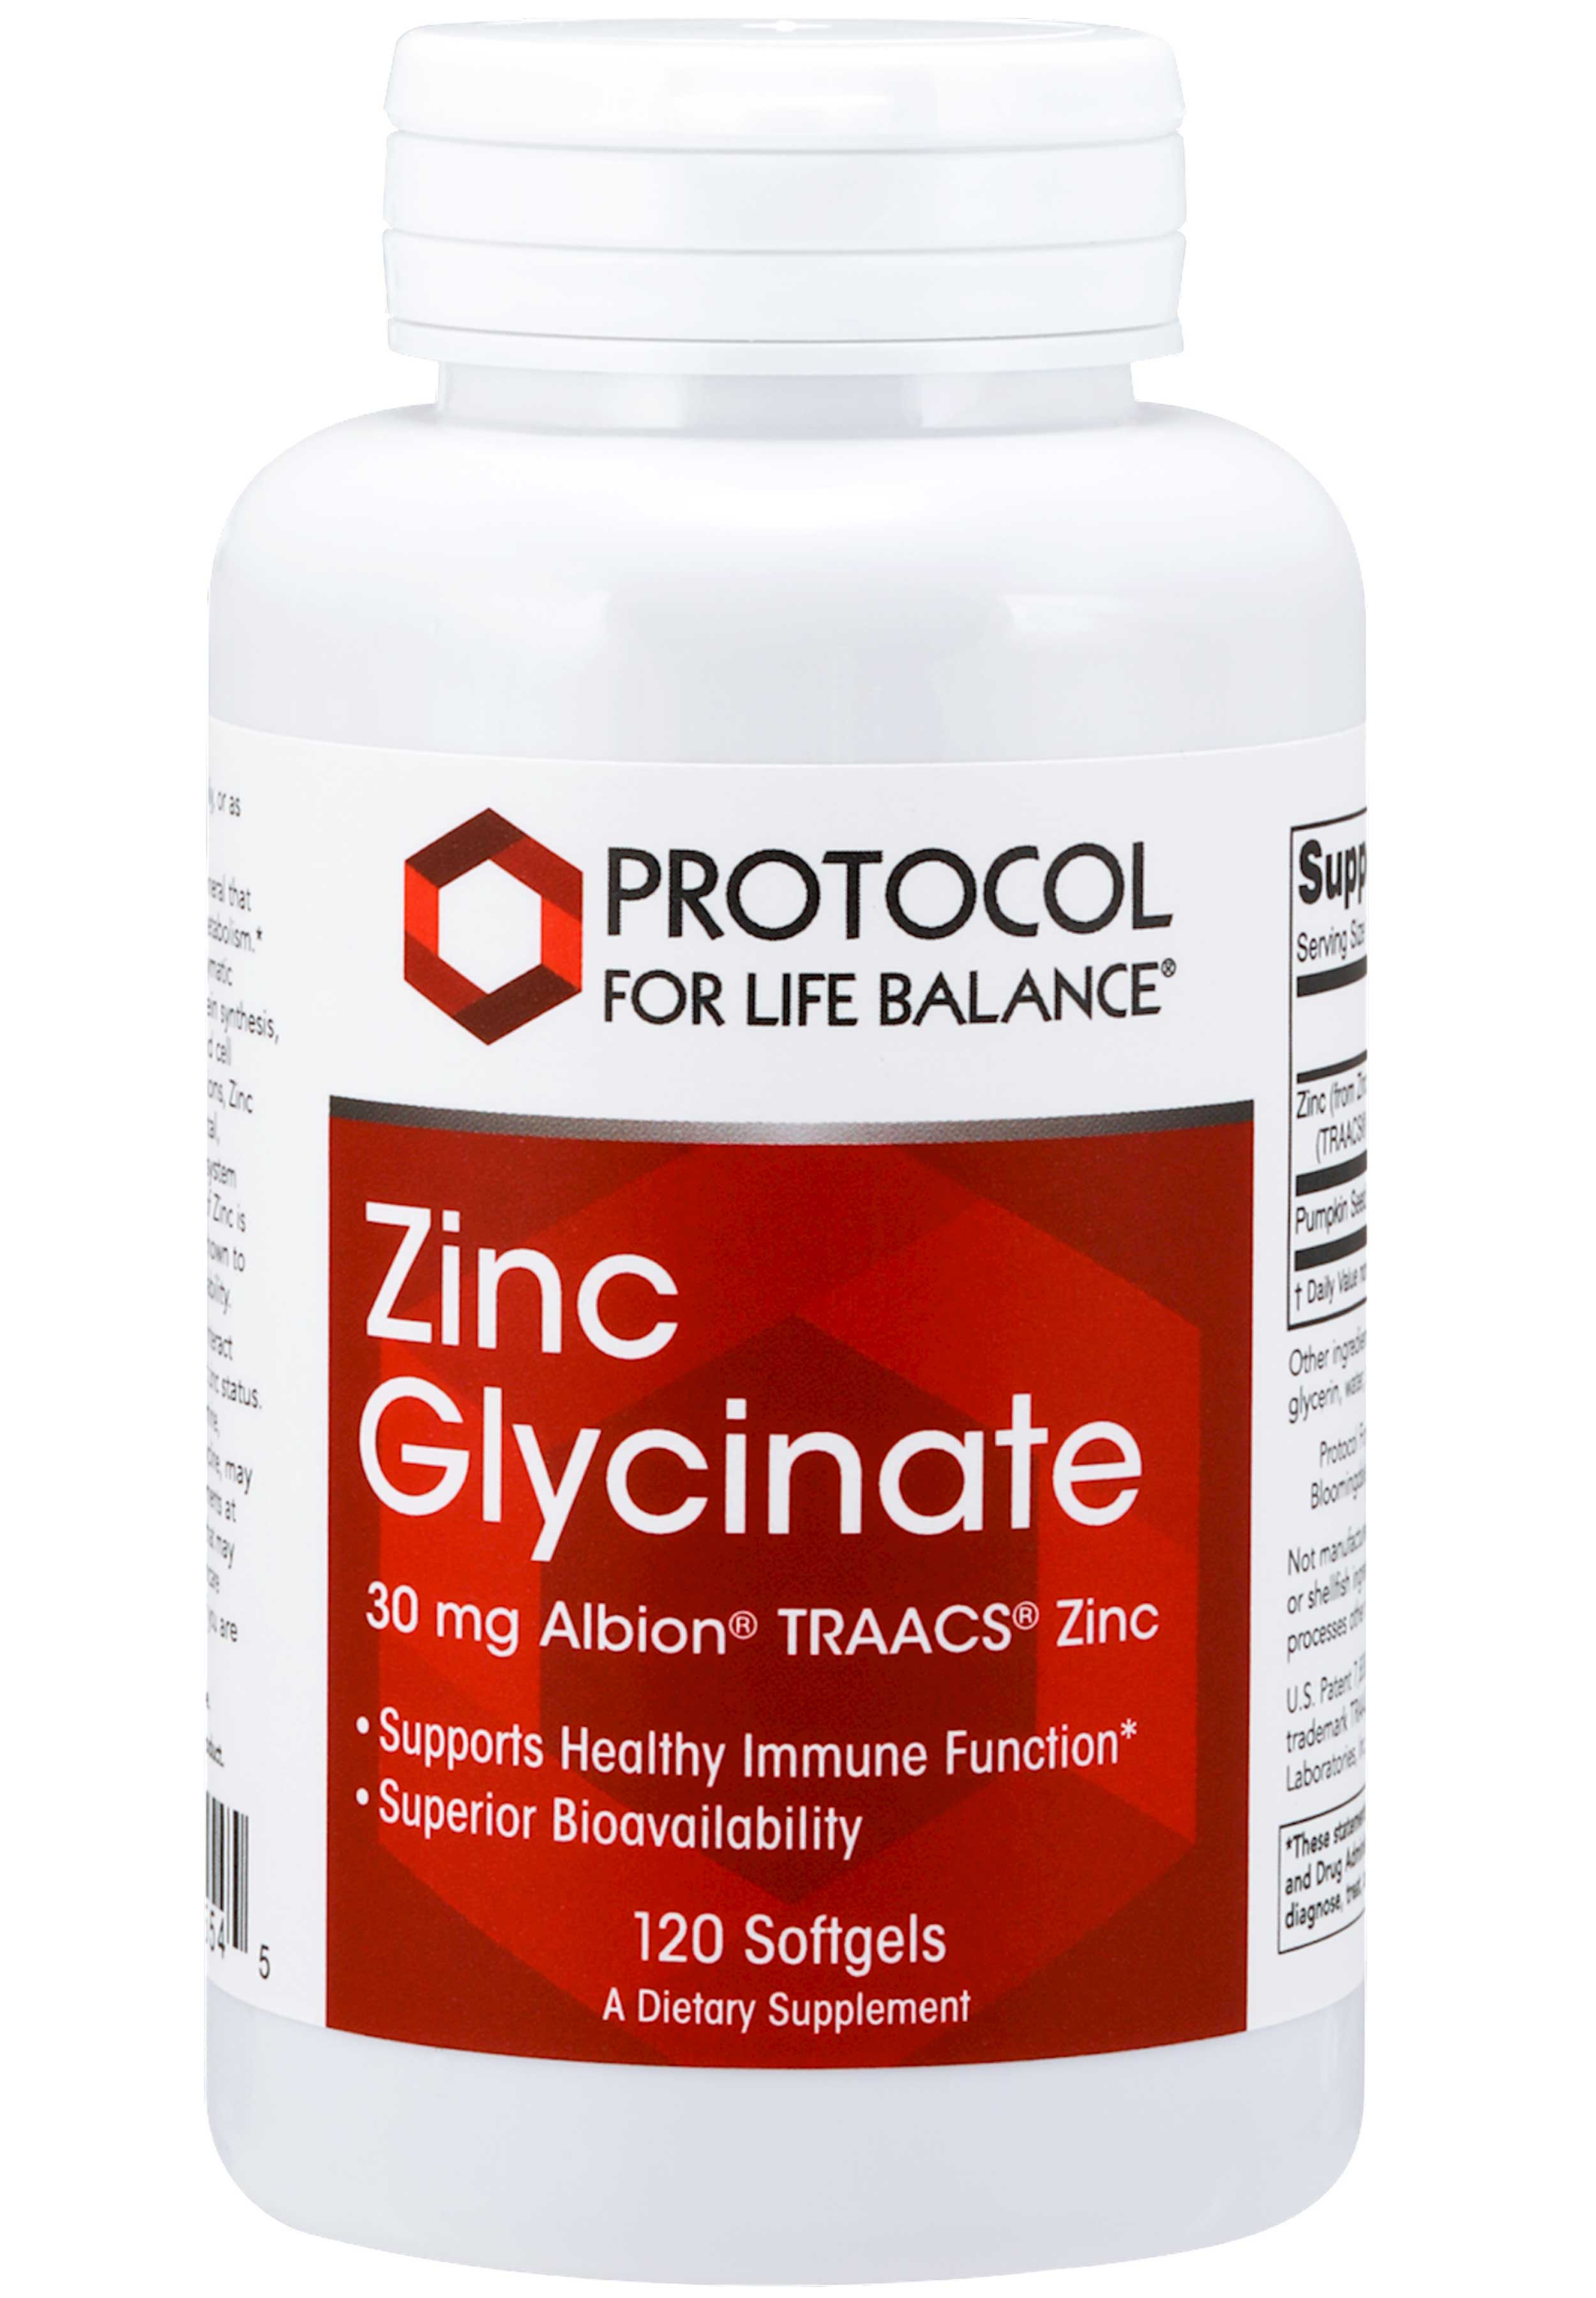 Protocol for Life Balance Zinc Glycinate